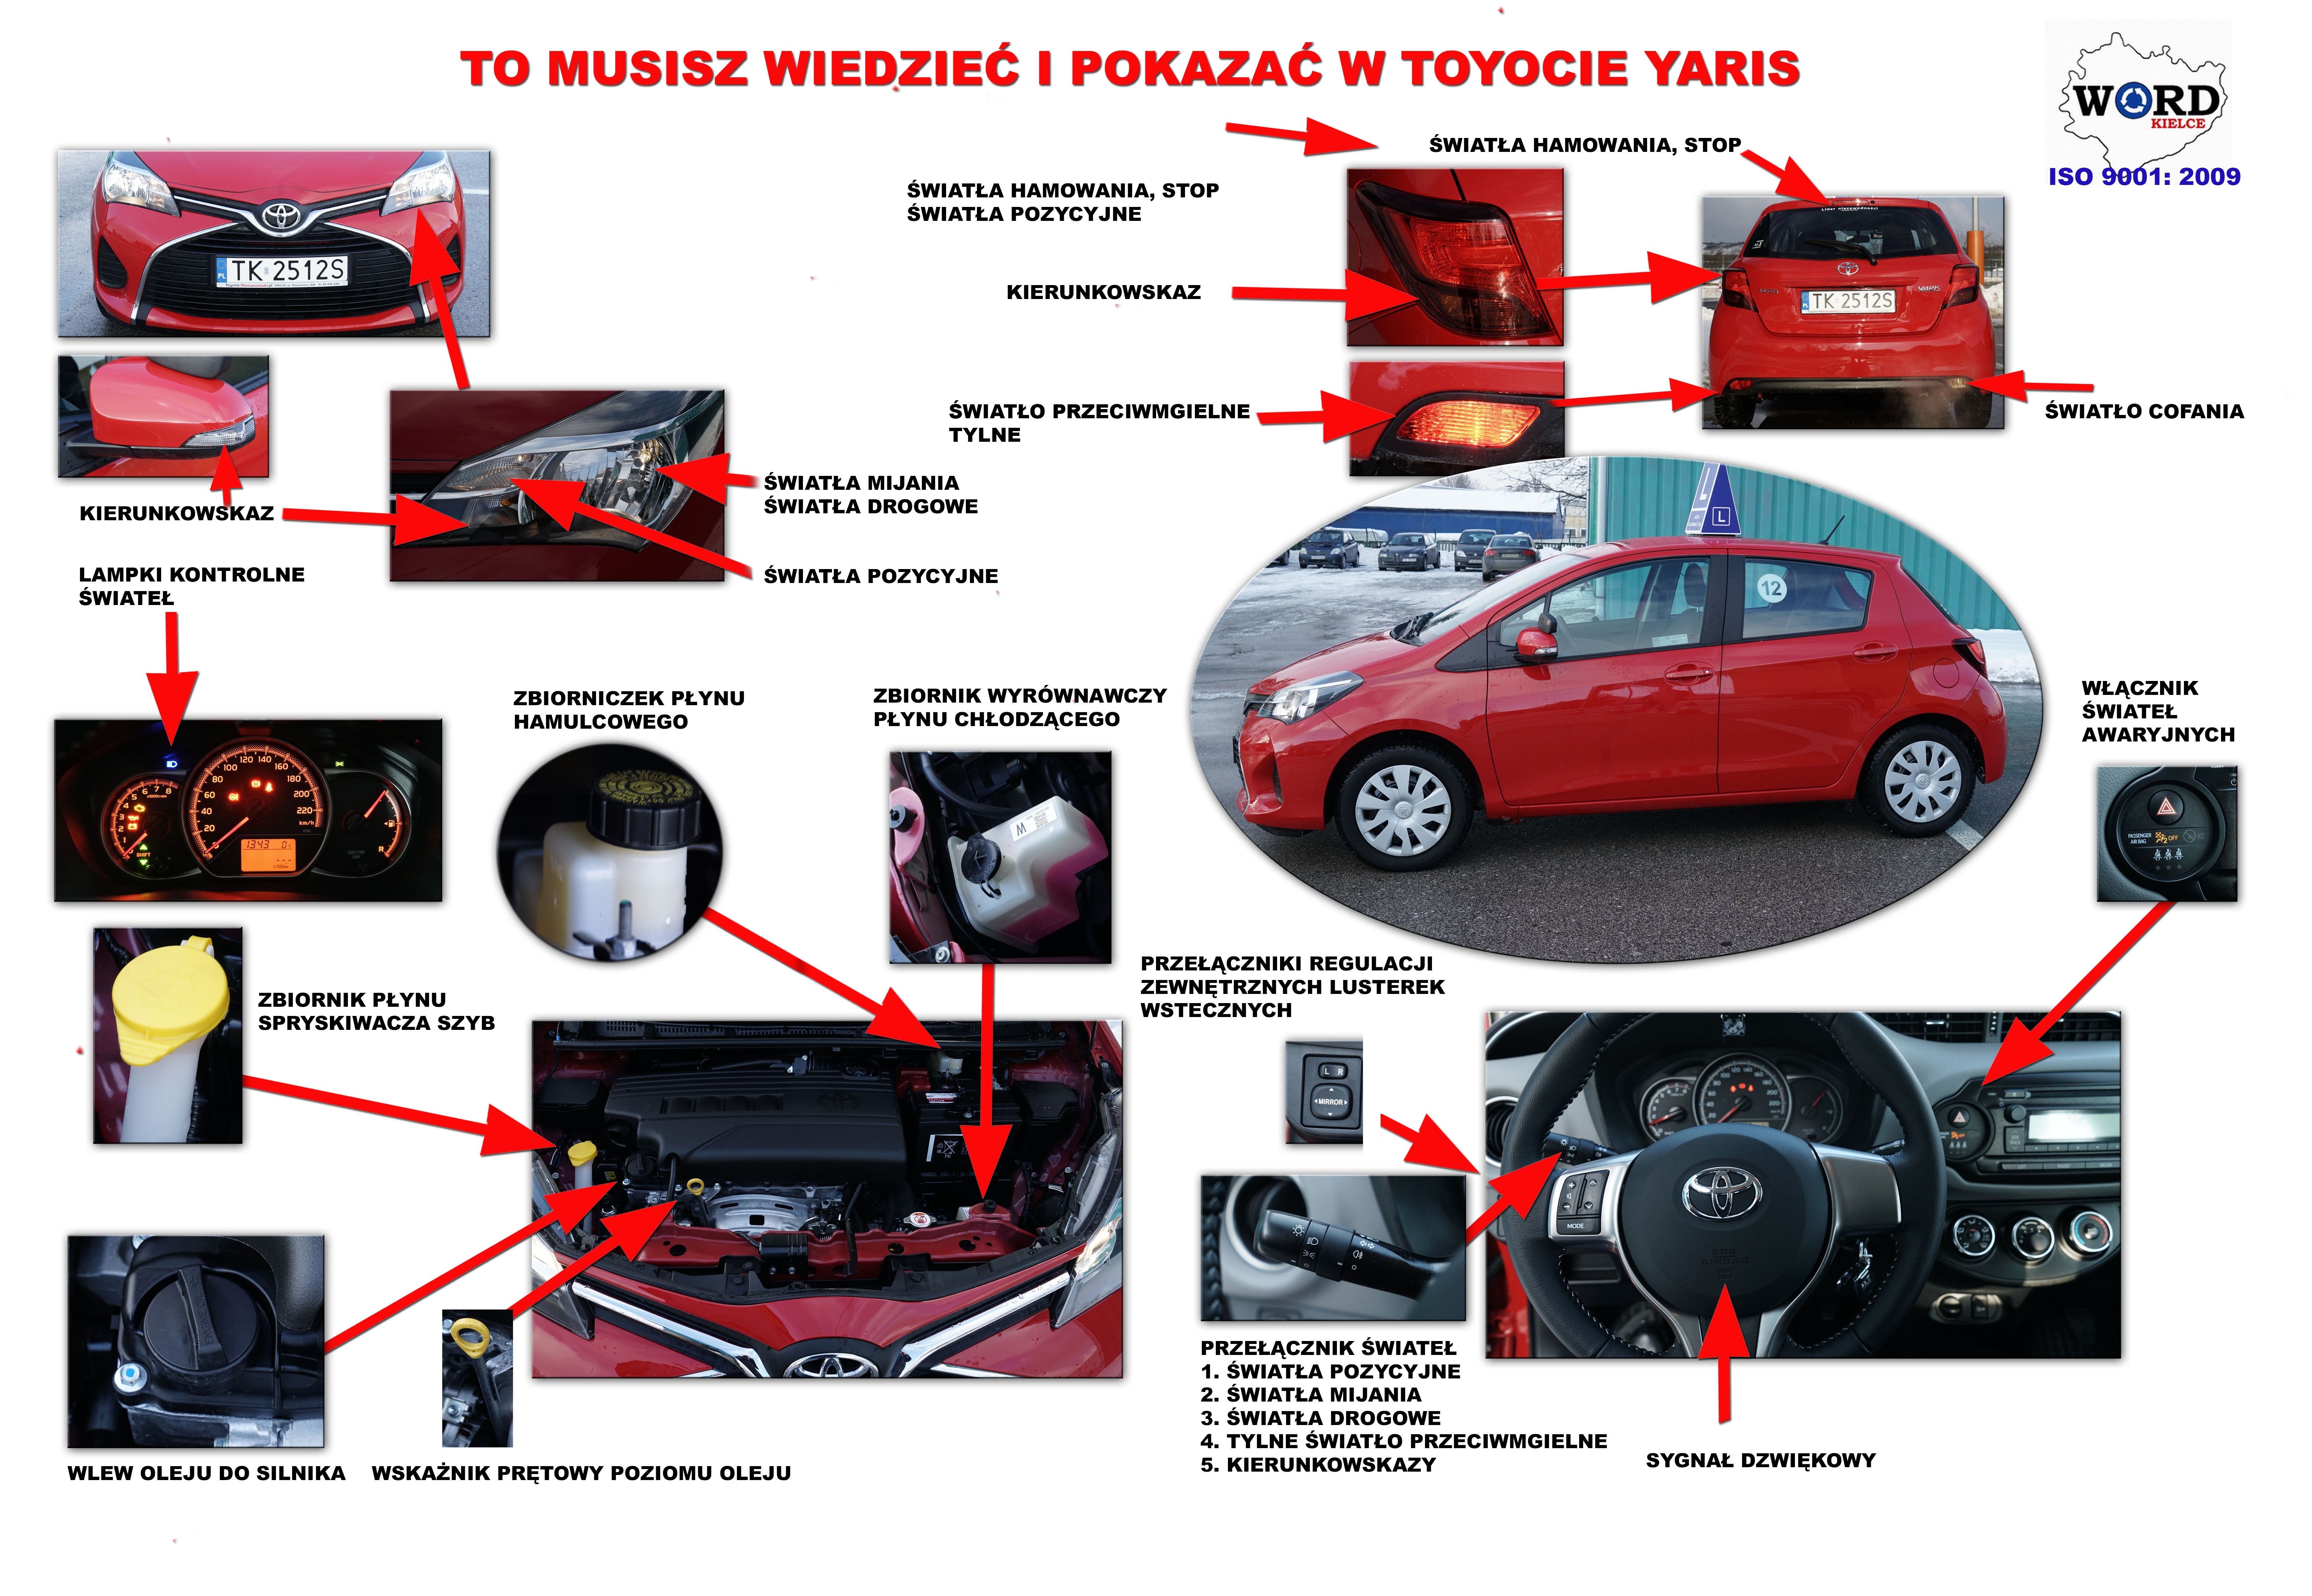 Ford samochod Toyota yaris egzamin